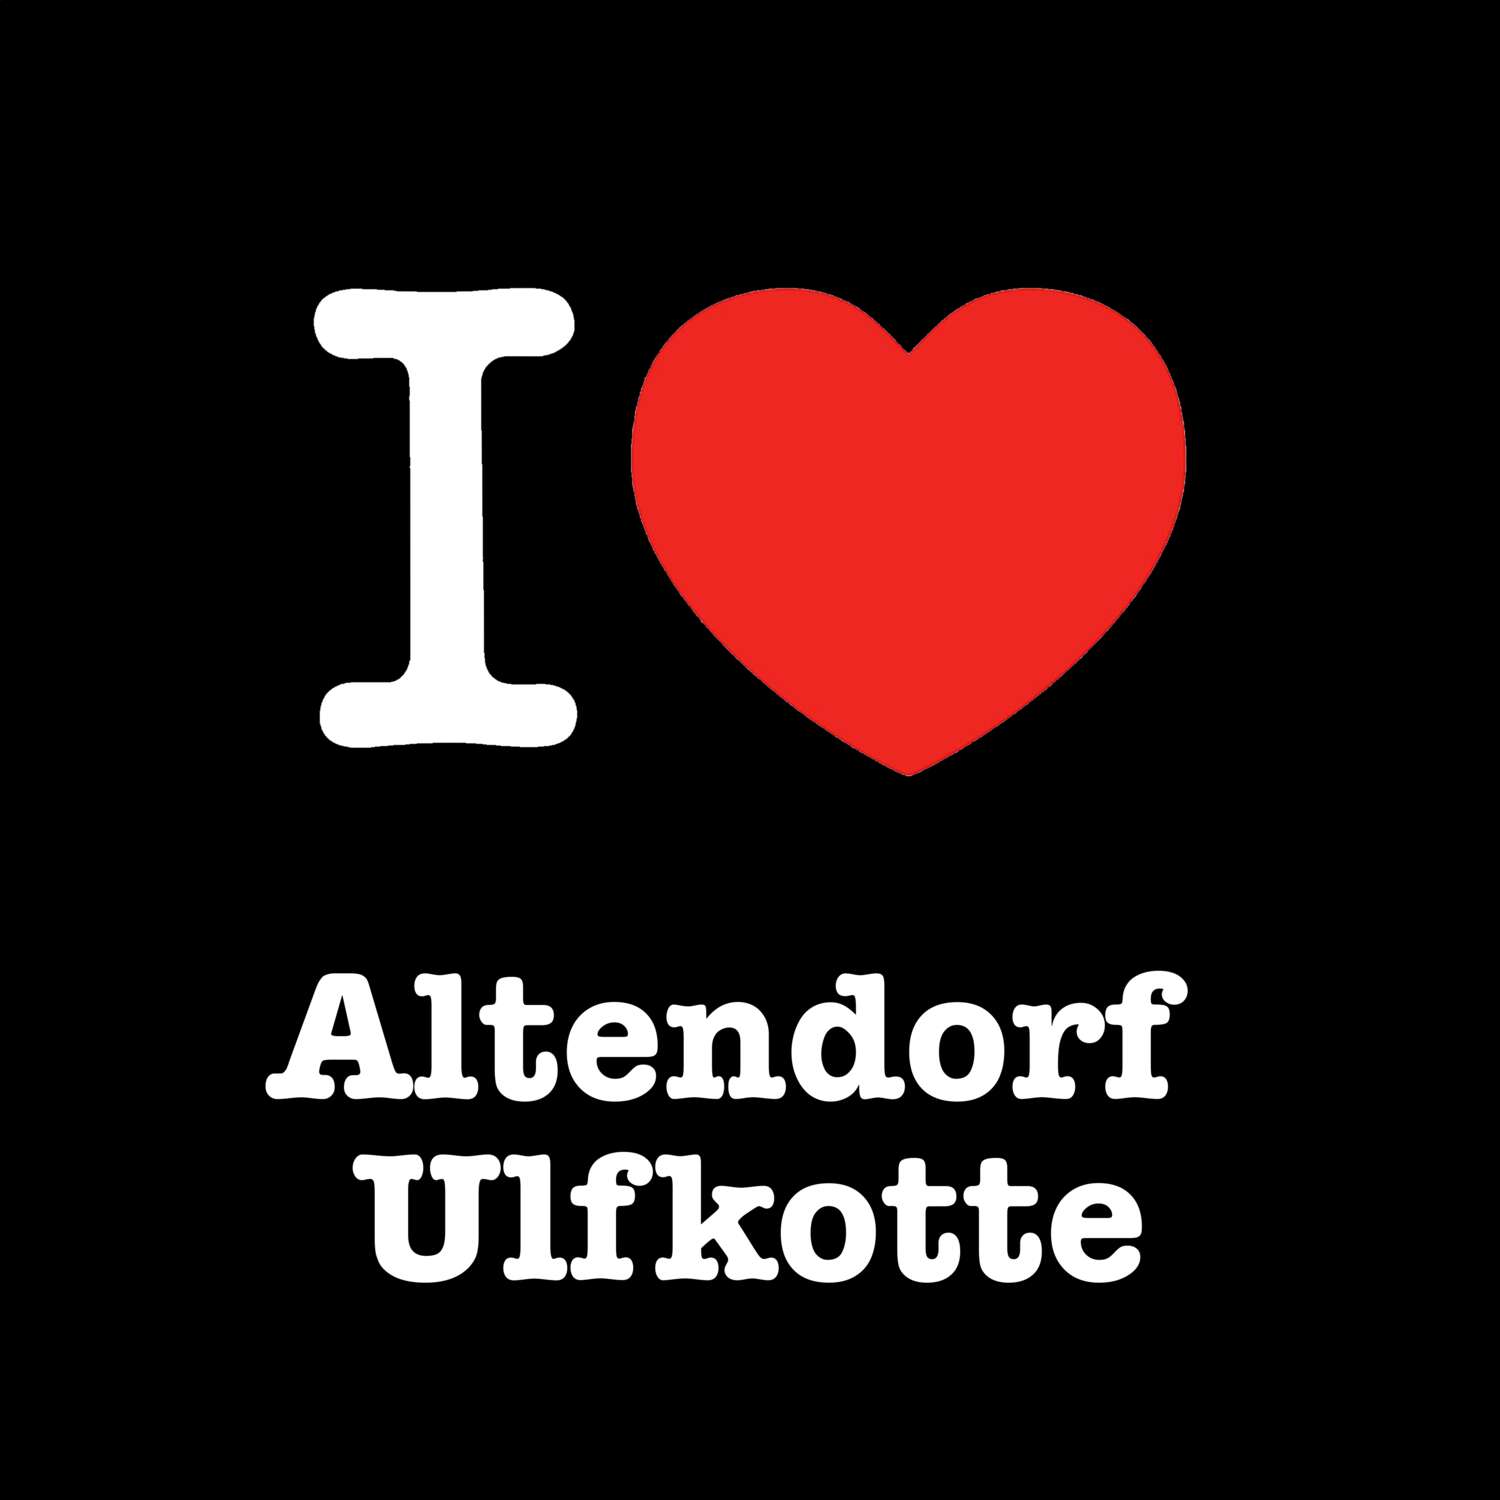 Altendorf Ulfkotte T-Shirt »I love«